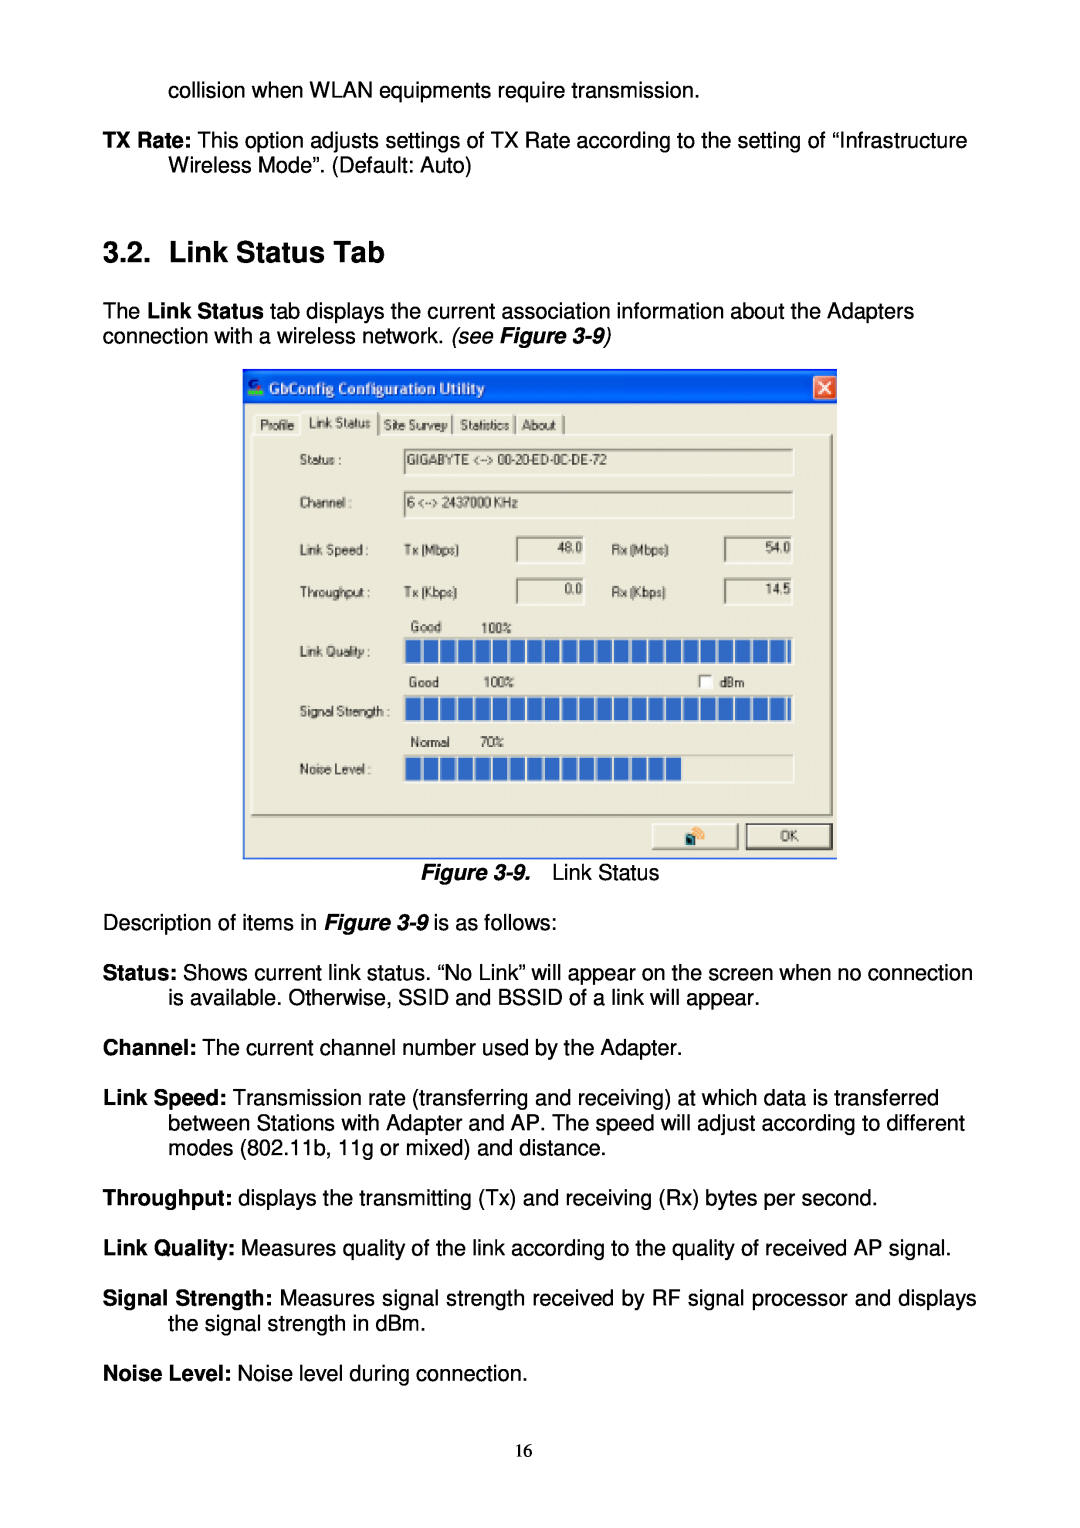 Gigabyte GN-WPKG user manual Link Status Tab, 9. Link Status 